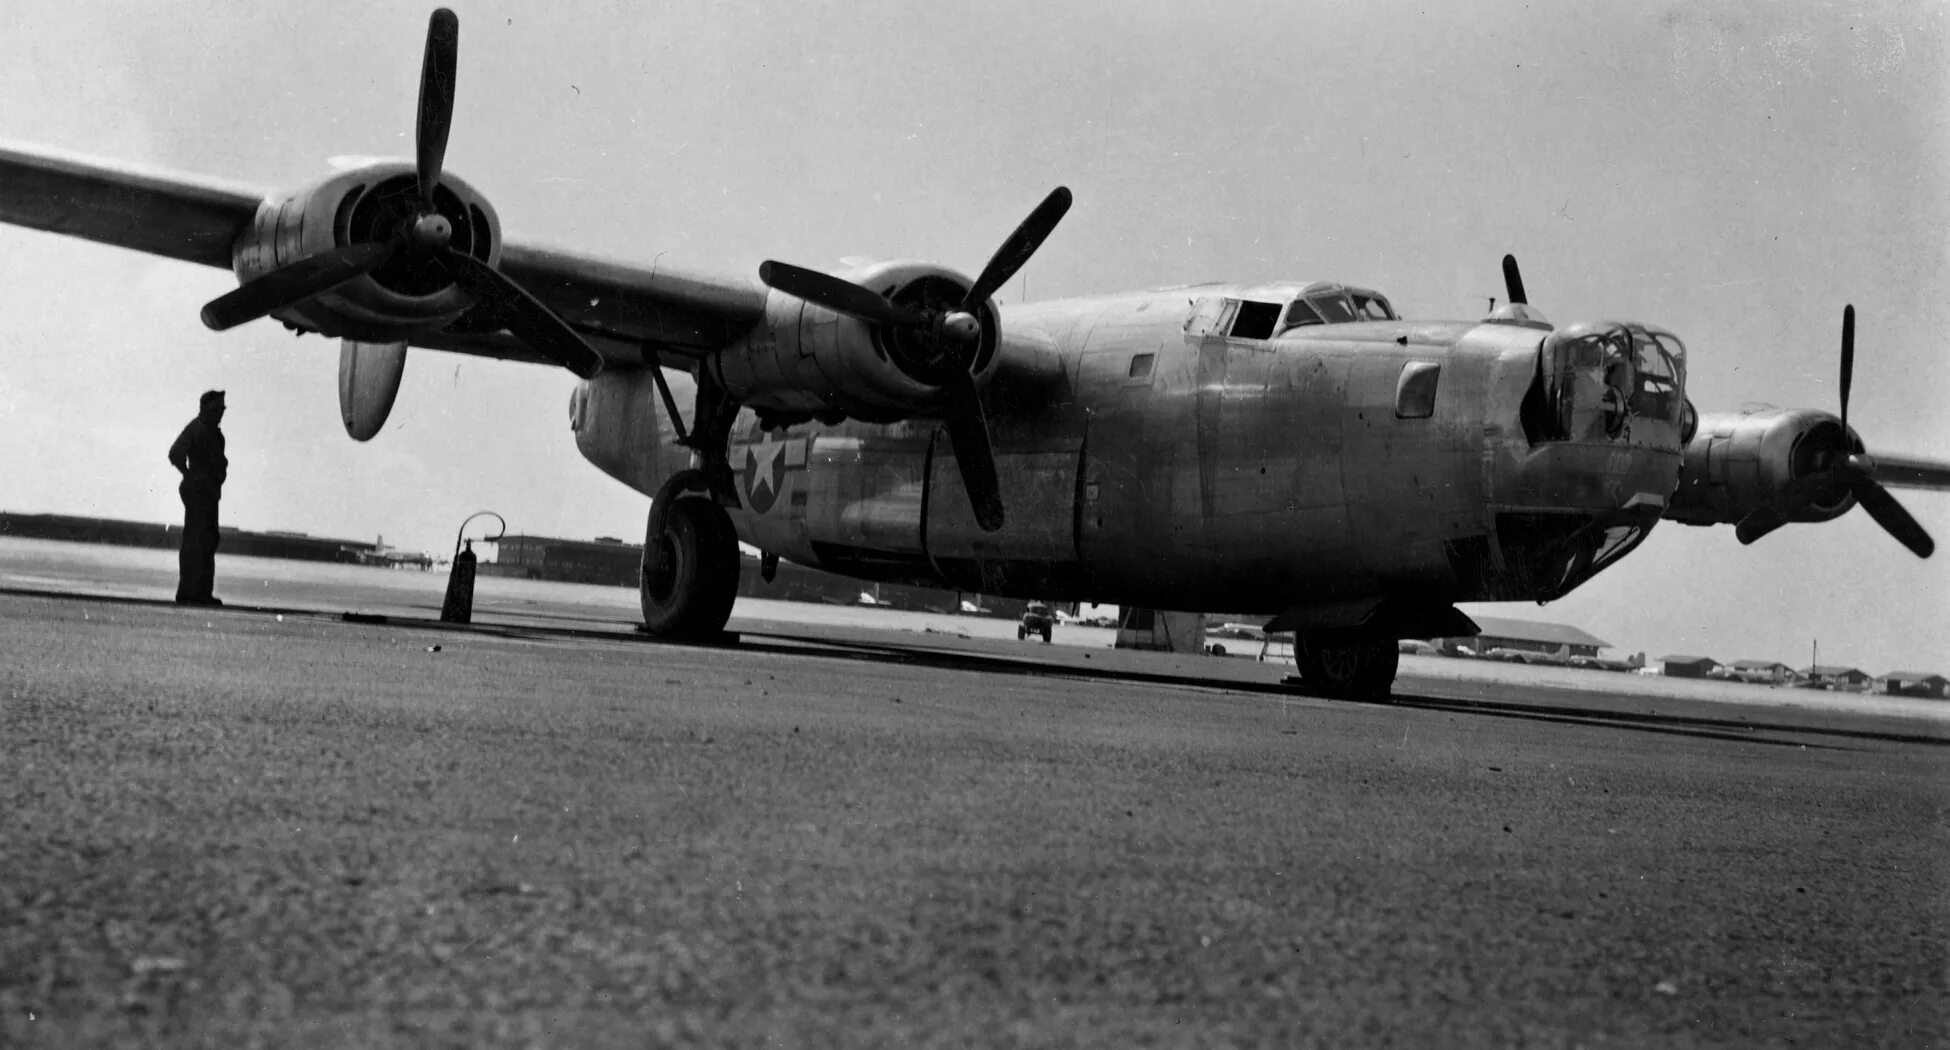 Б-24 Либерейтор. "Консолидэйтед" b-24 "Либерейтор". B-24 Bomber. Consolidated b-24 Liberator. Б 24 рассказ